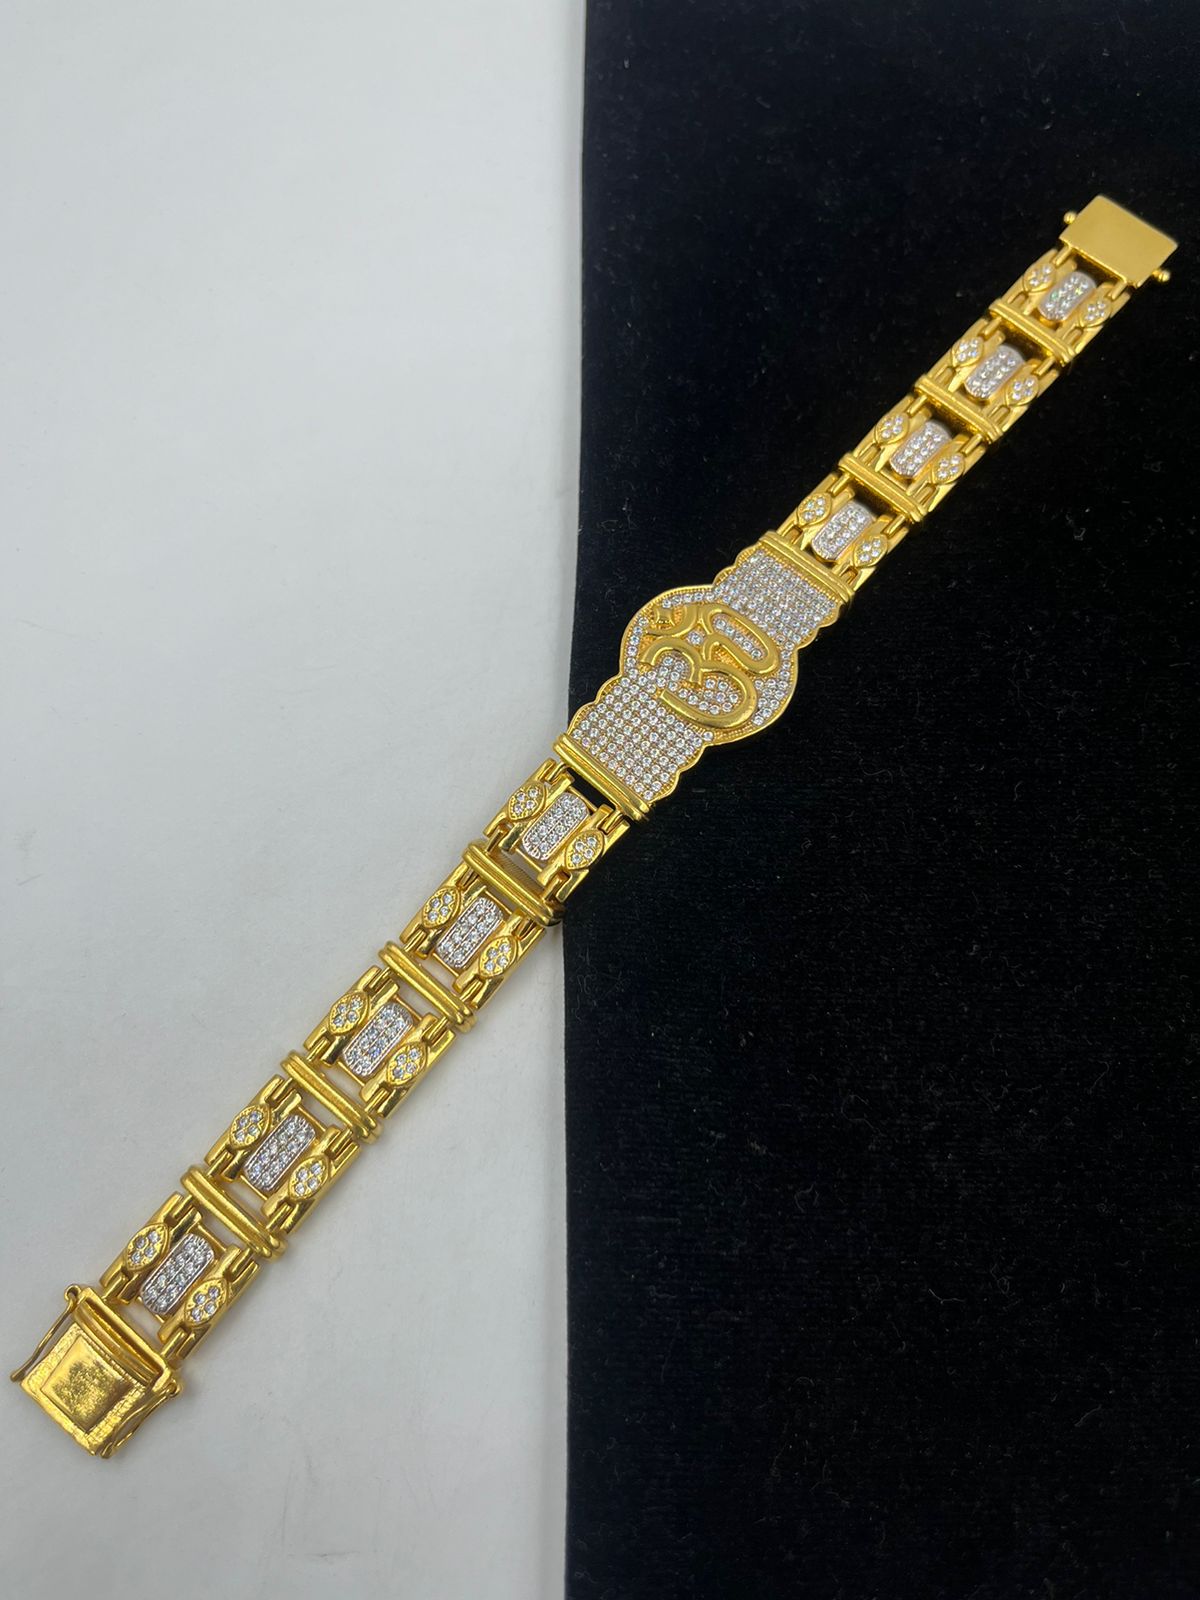 1 Gram Gold Plated Link Pokal Attention-Getting Design Bracelet For Men -  Style C587 at Rs 2560.00 | गोल्ड प्लेटेड ब्रेसलेट - Soni Fashion, Rajkot |  ID: 2851825912691